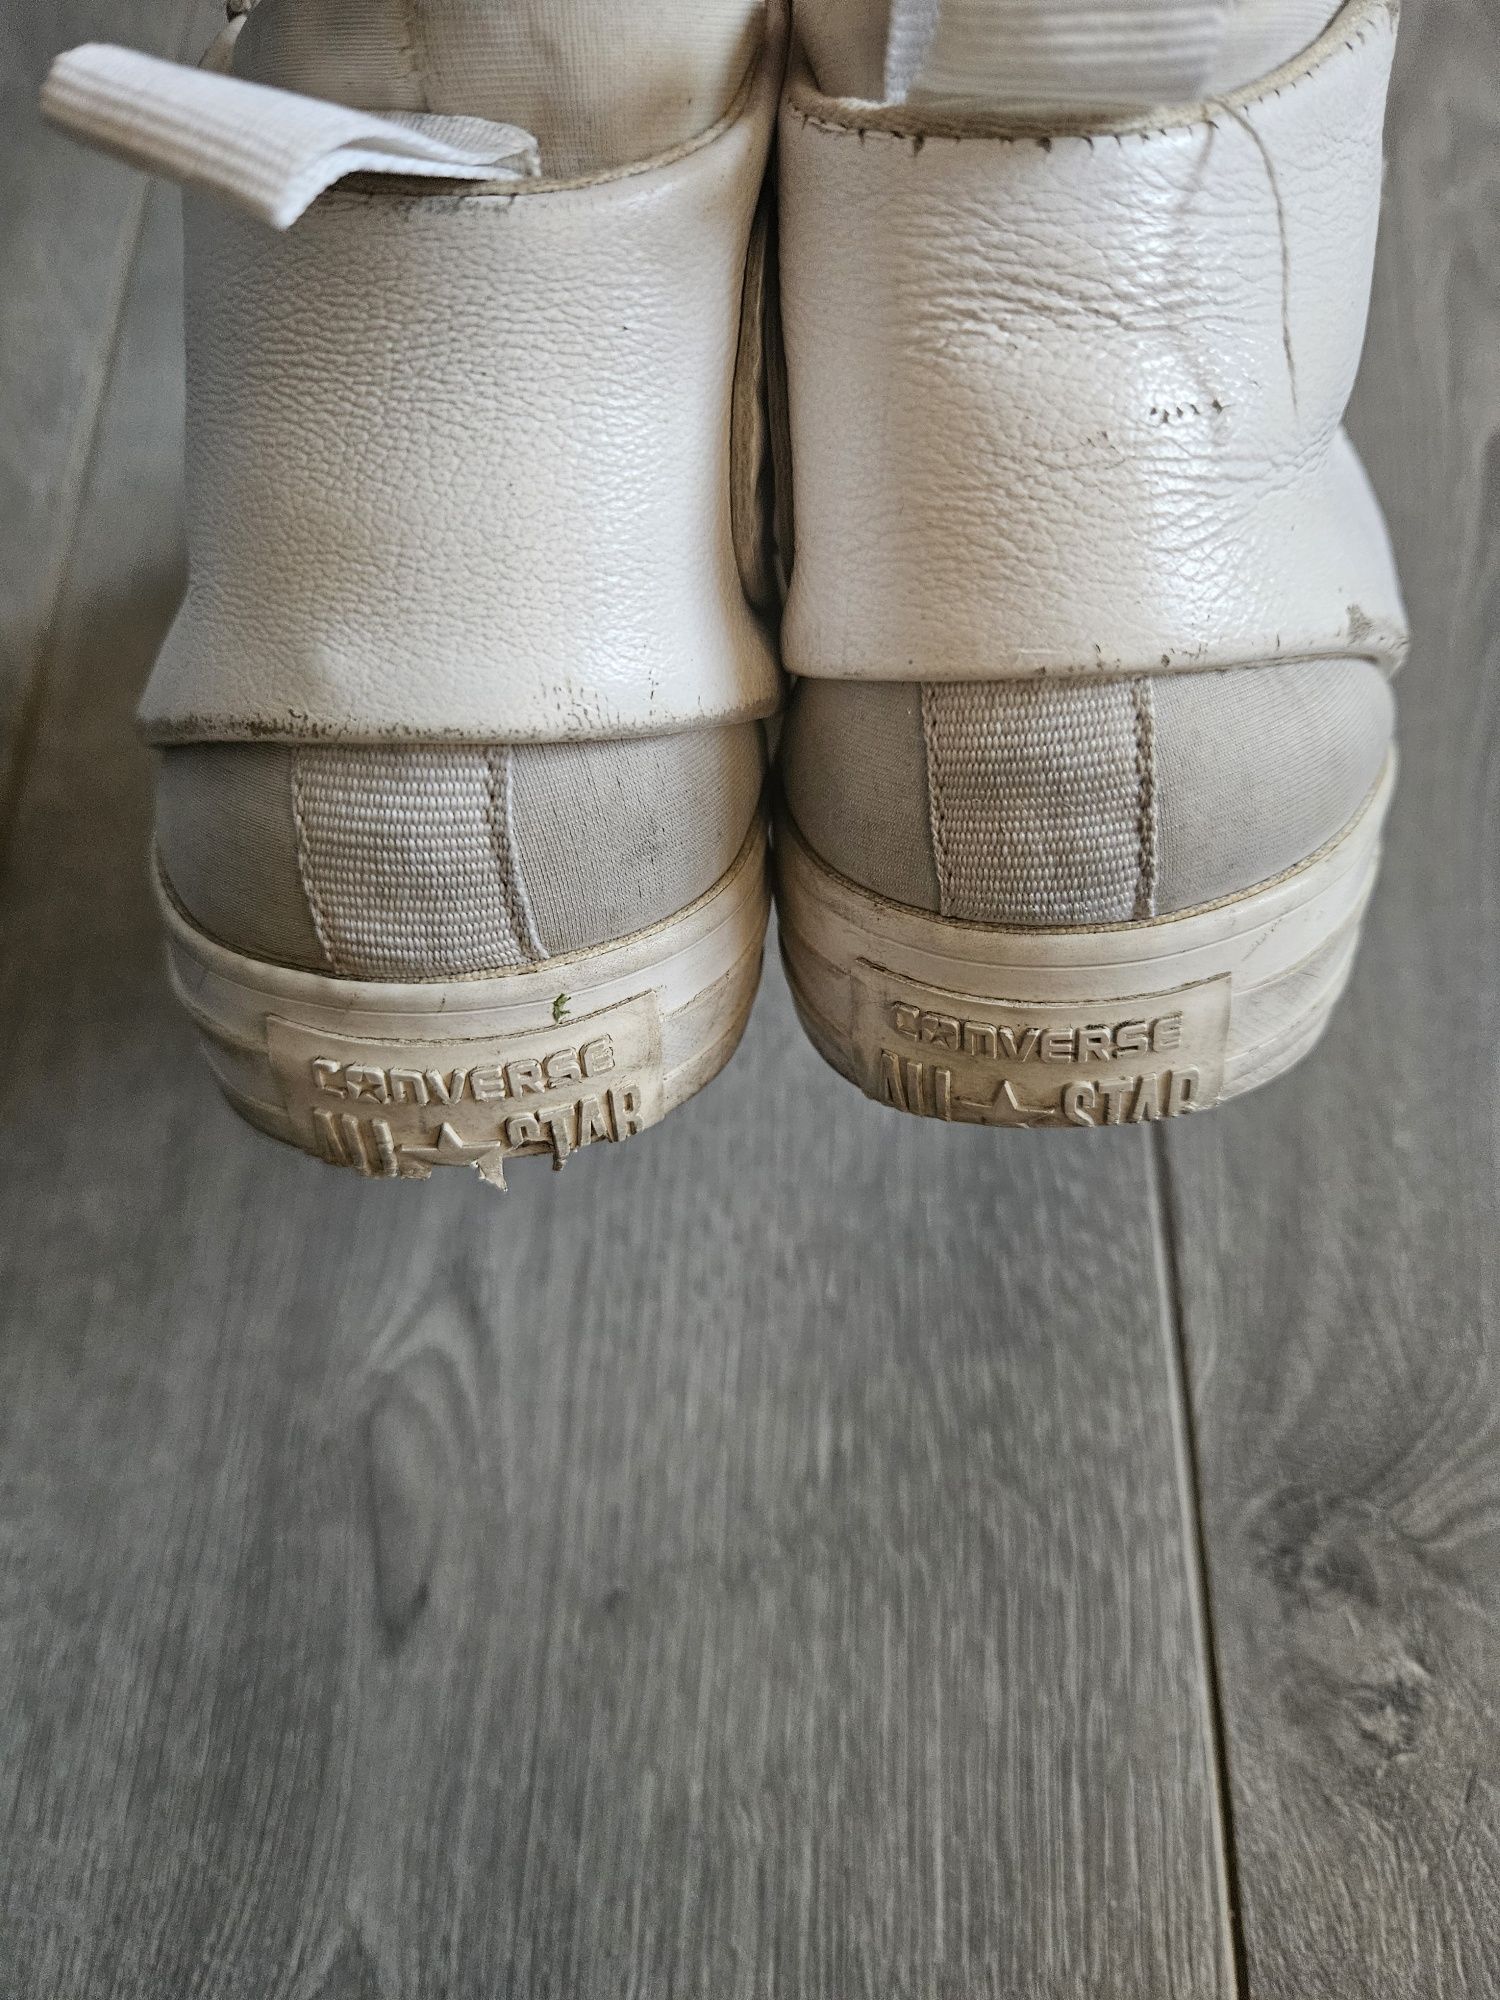 Buty białe trampki Converse r 37